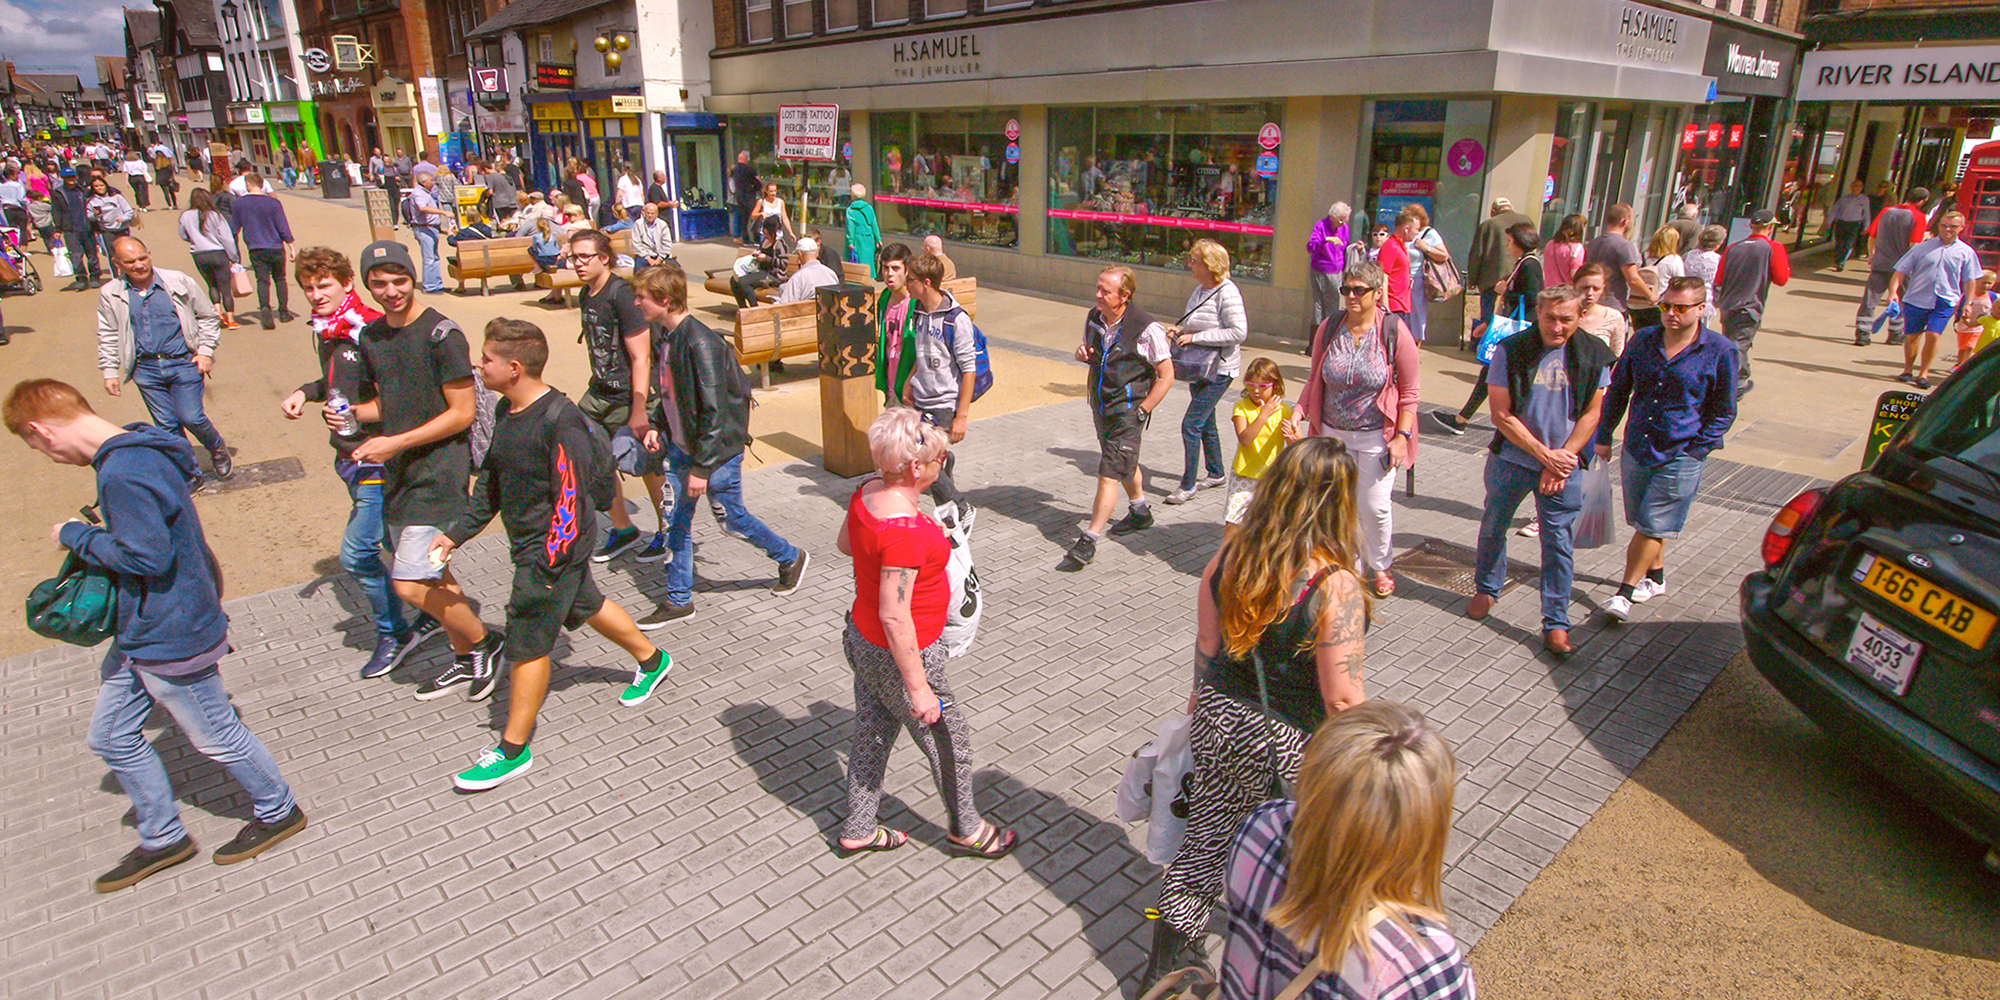 People walking through Frodsham Street Public Realm Chester, UK